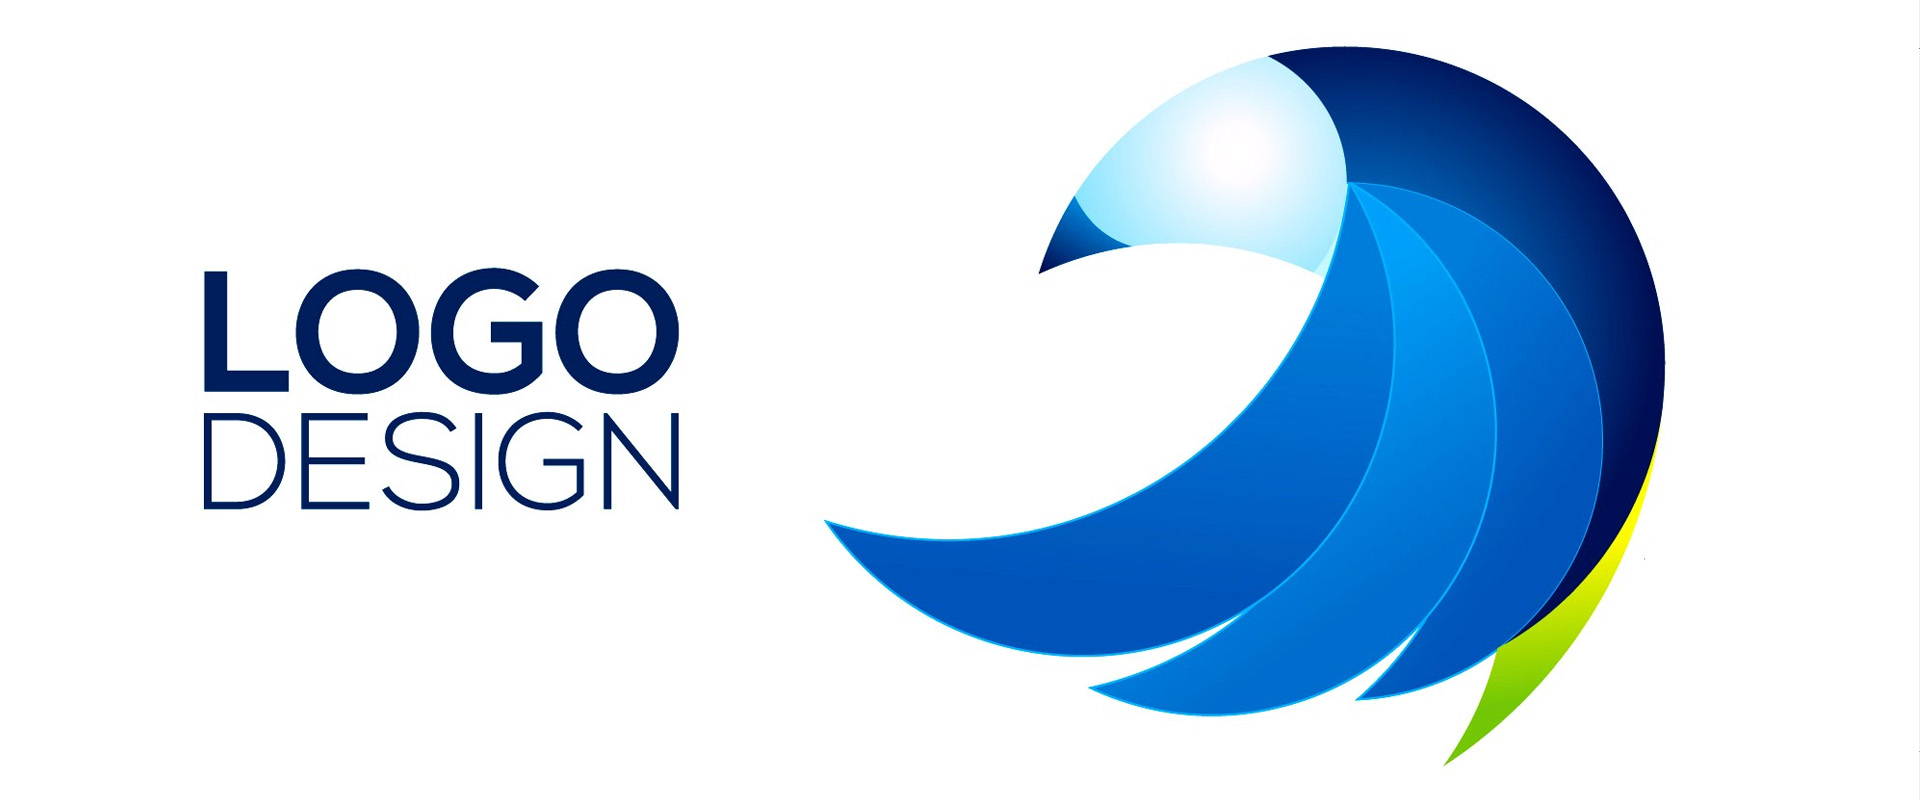 Image result for logo design company